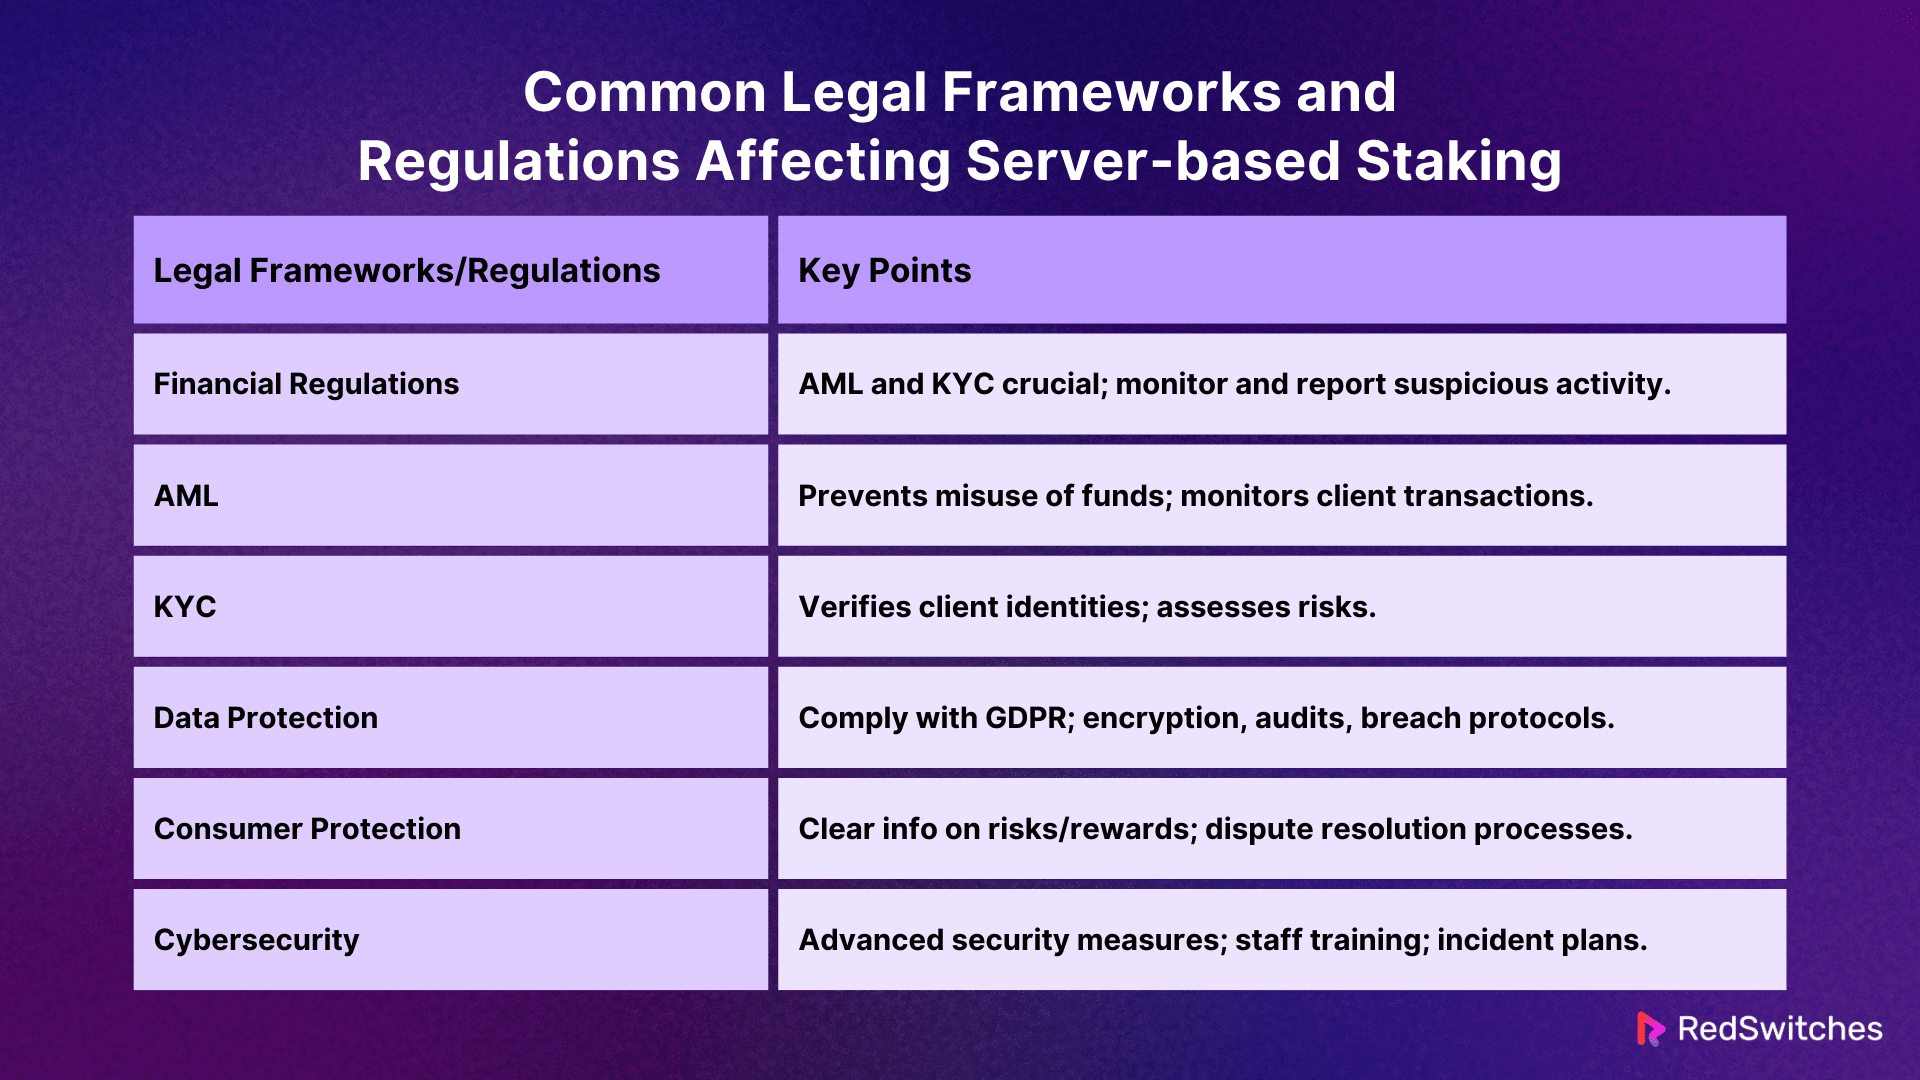 Common Legal Frameworks and Regulations Affecting Server-Based Staking